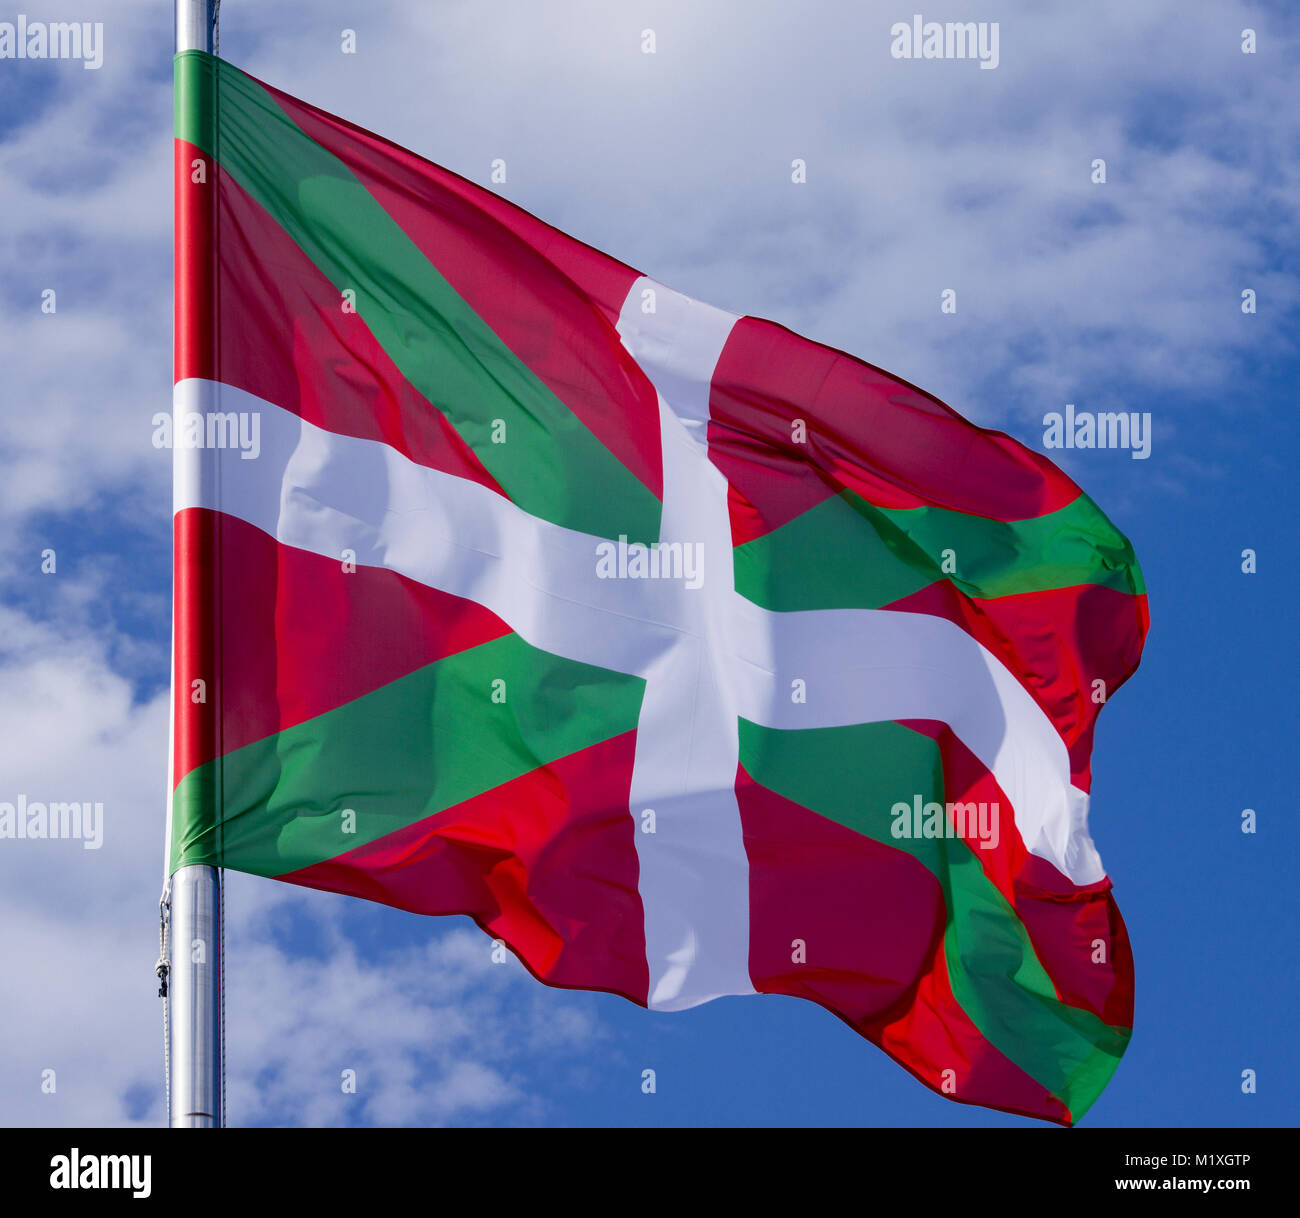 'Ikurriña', Basque country flag Stock Photo